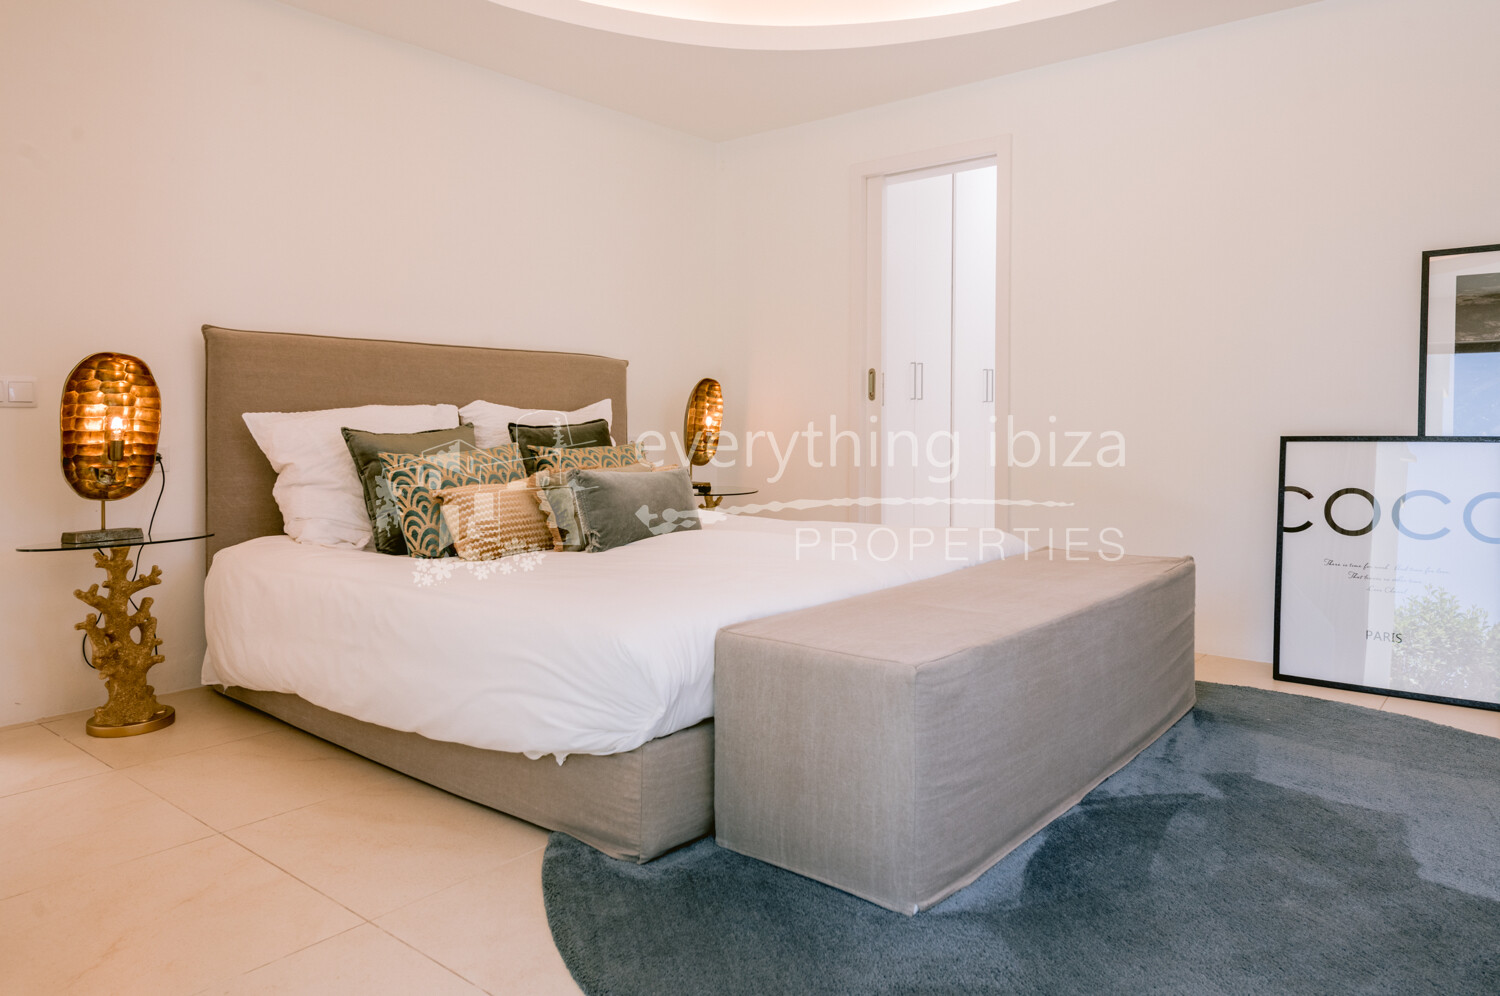 Stylish Modern Minimalistic Villa Close to Popular Jesus Village, ref. 1714, for sale in Ibiza by everything ibiza Properties